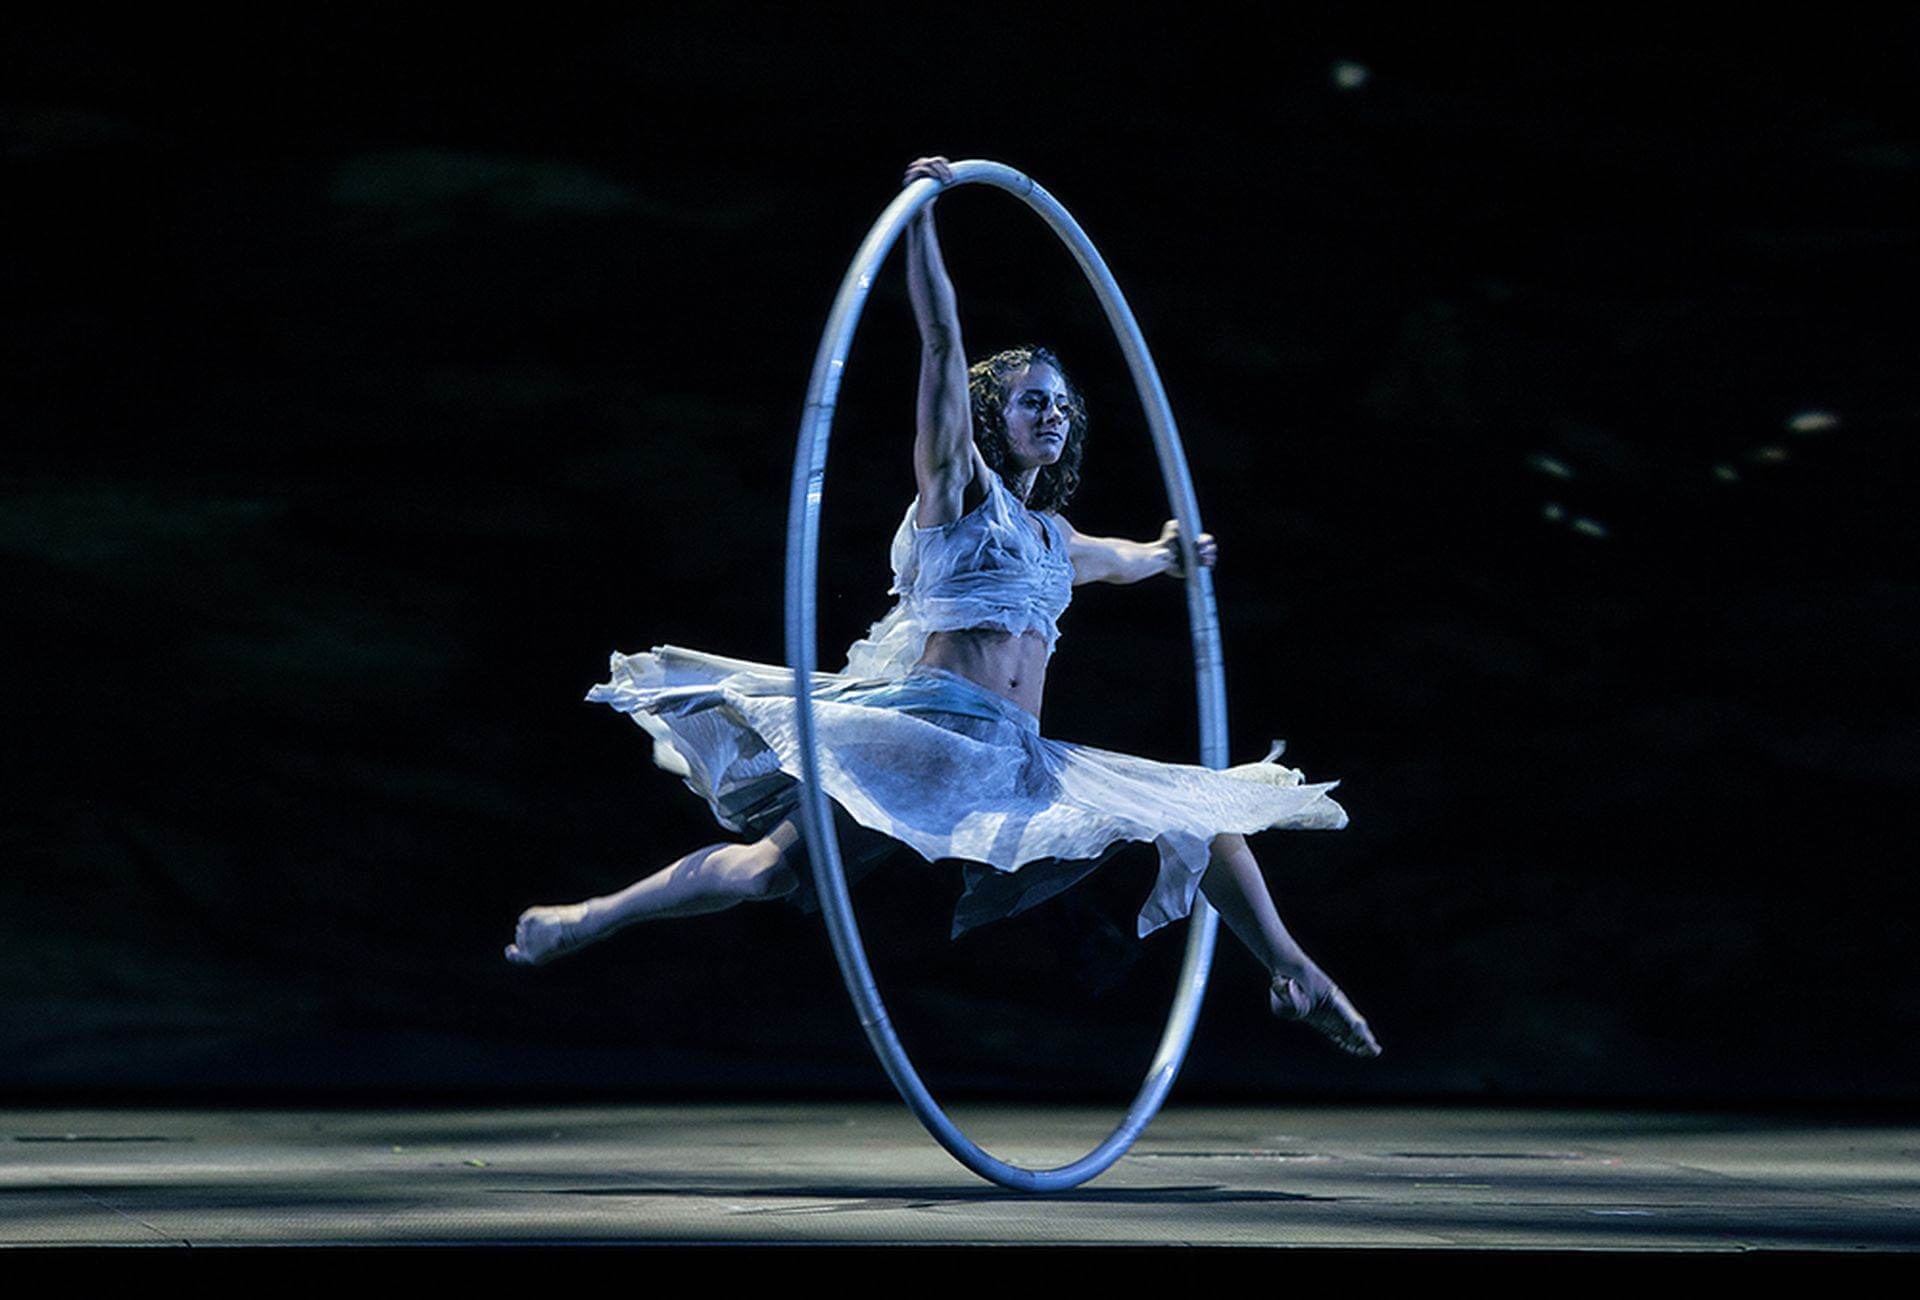 Scalada - Mater Natura by Cirque du Soleil 2014: Balancing exercises and acrobatics inside a wheel